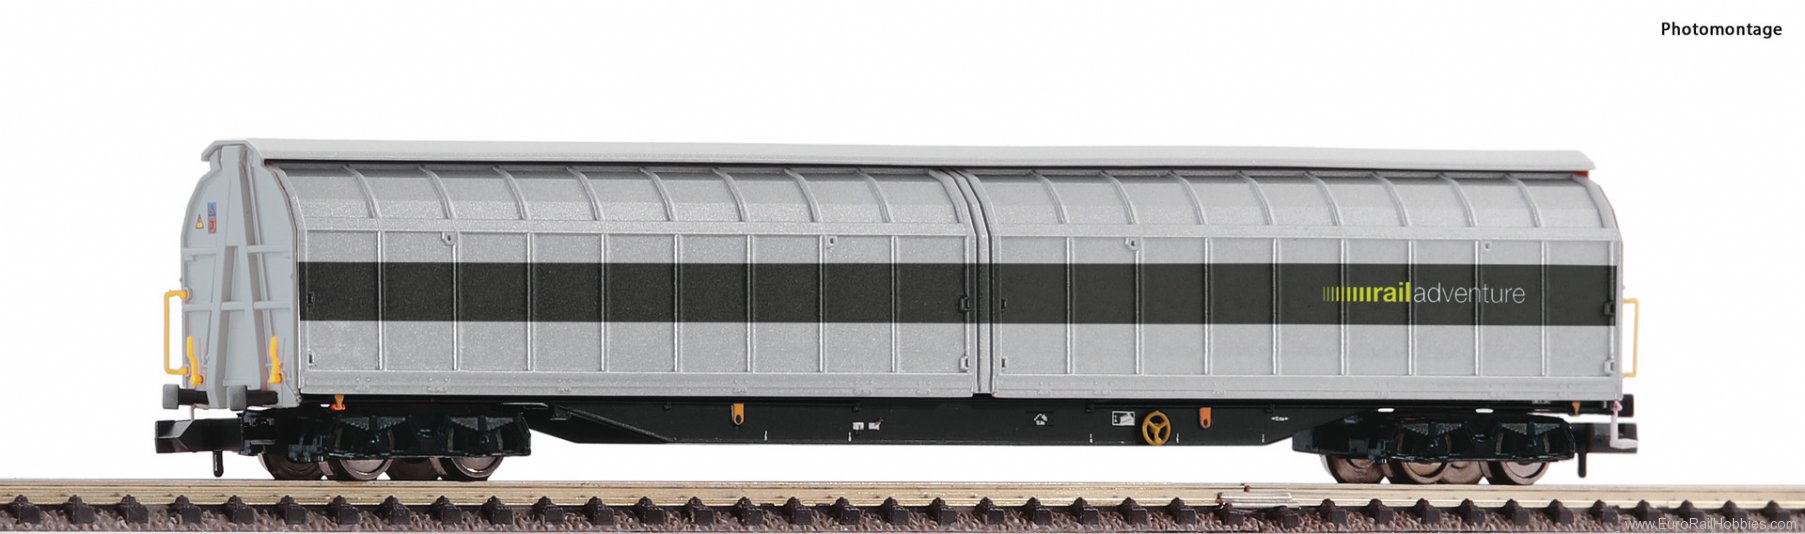 Fleischmann 6660068 High capacity sliding wall wagon, Railadventu